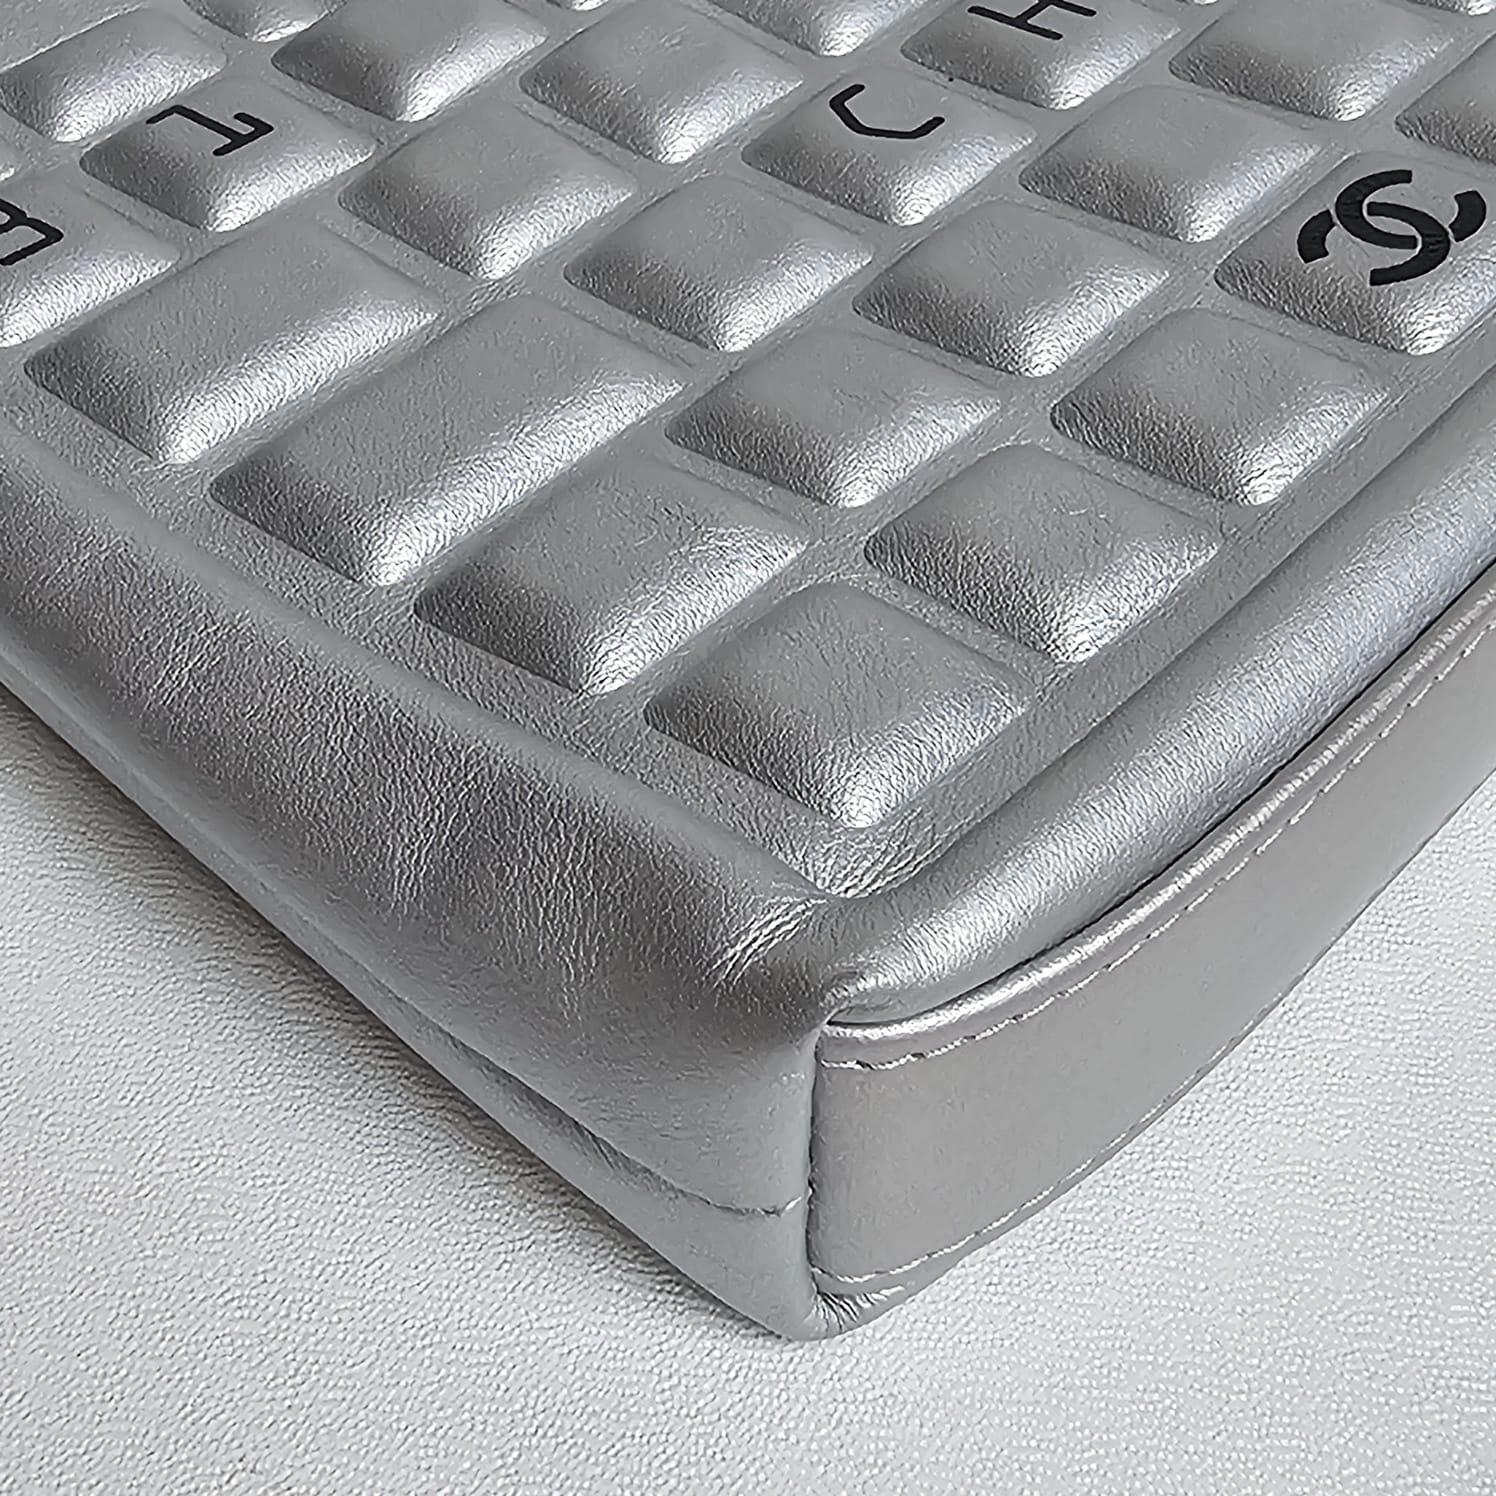 Rare 2017 Chanel Metallic Silver Keyboard Zip Clutch For Sale 5